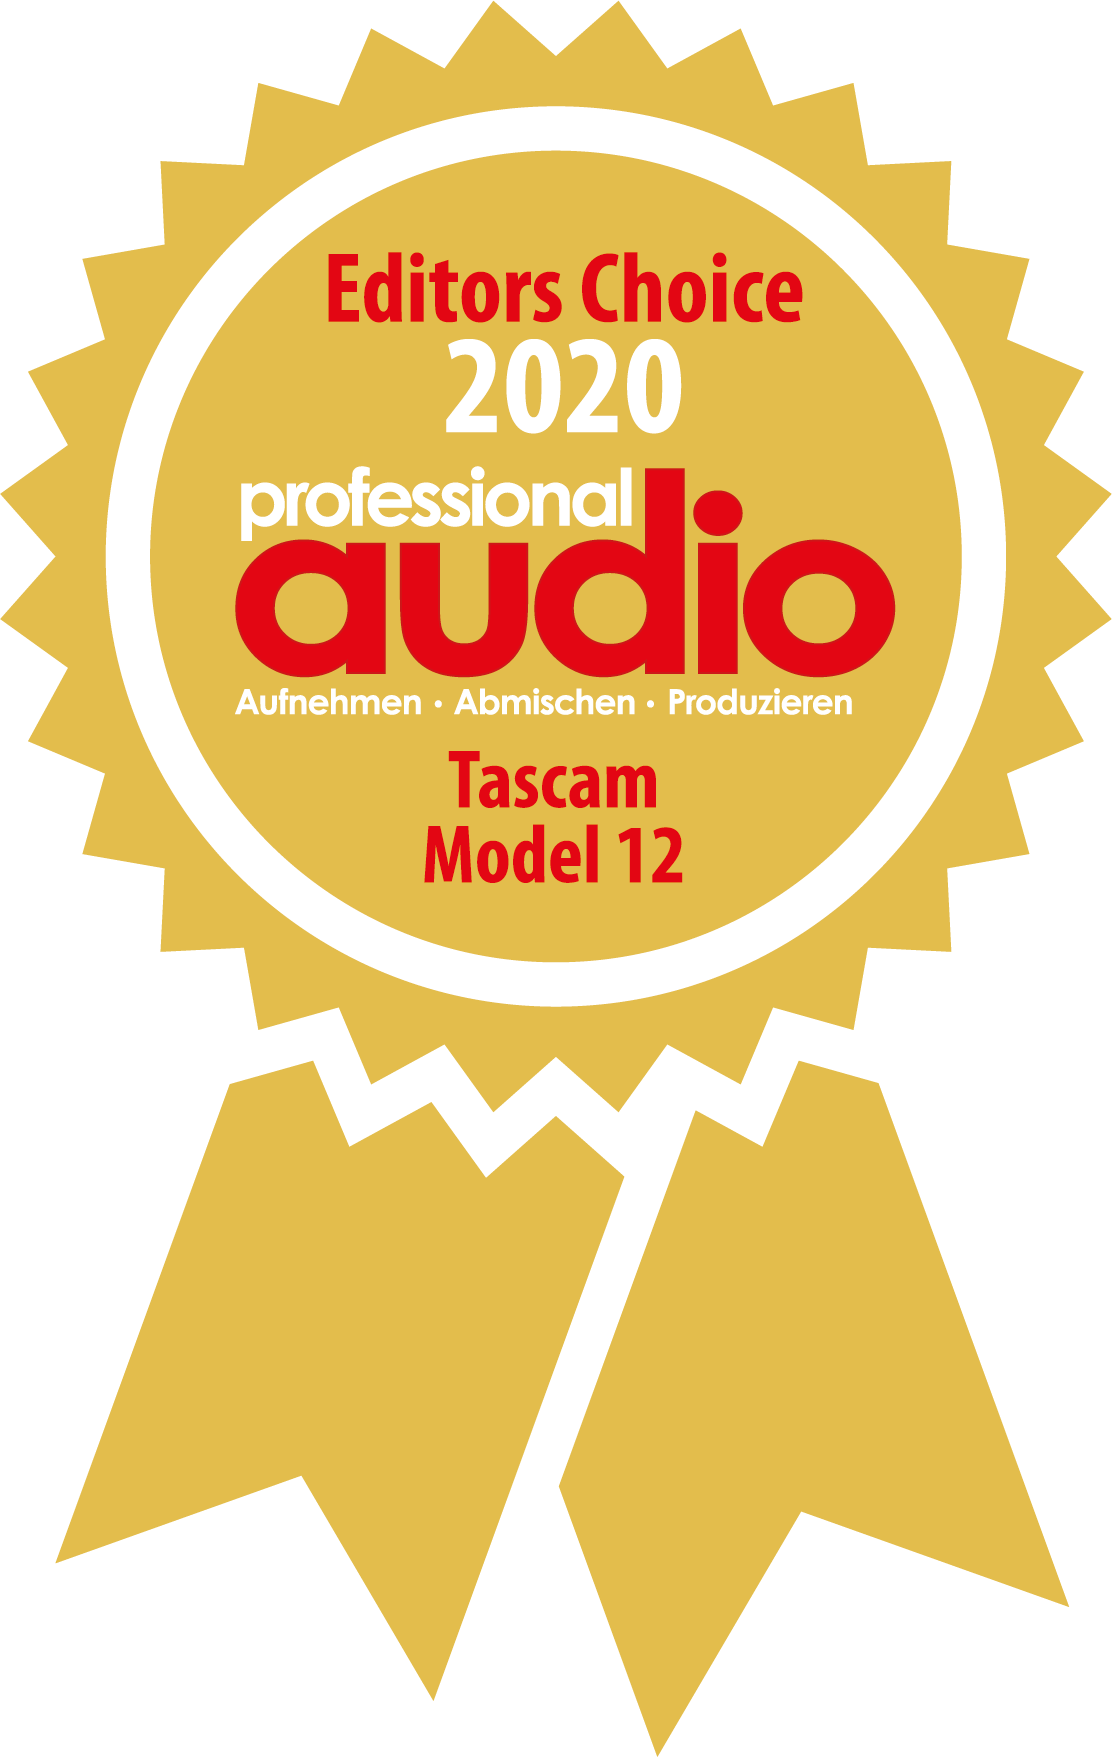 Tascam Model 12 ist Editor’s Choice 2020